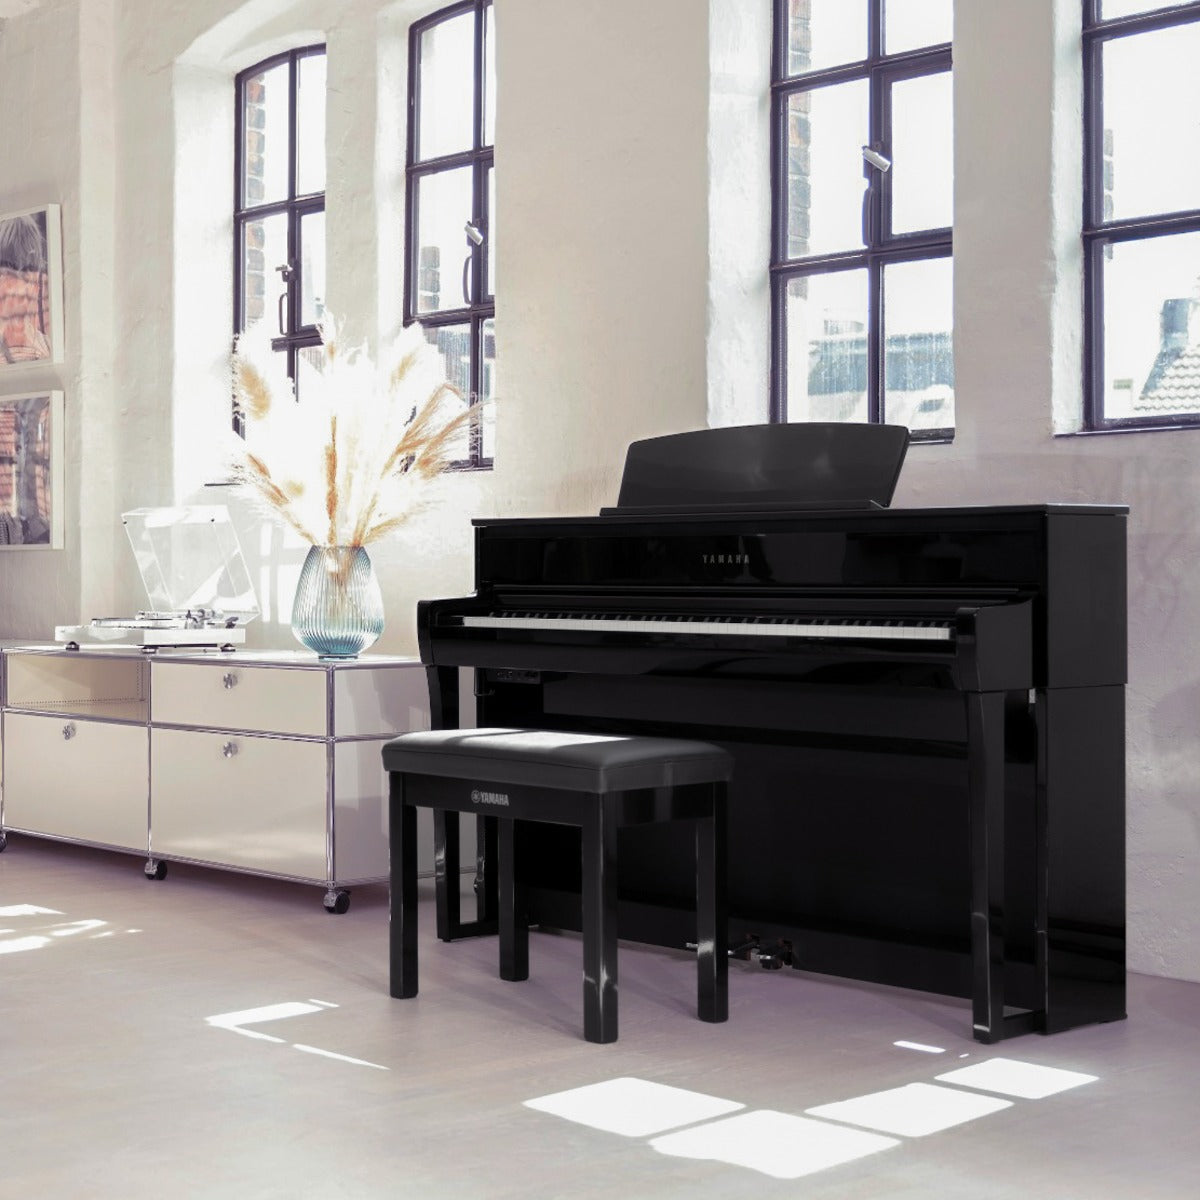 Yamaha Clavinova CLP-775 Digital Piano - Polished Ebony – Kraft Music